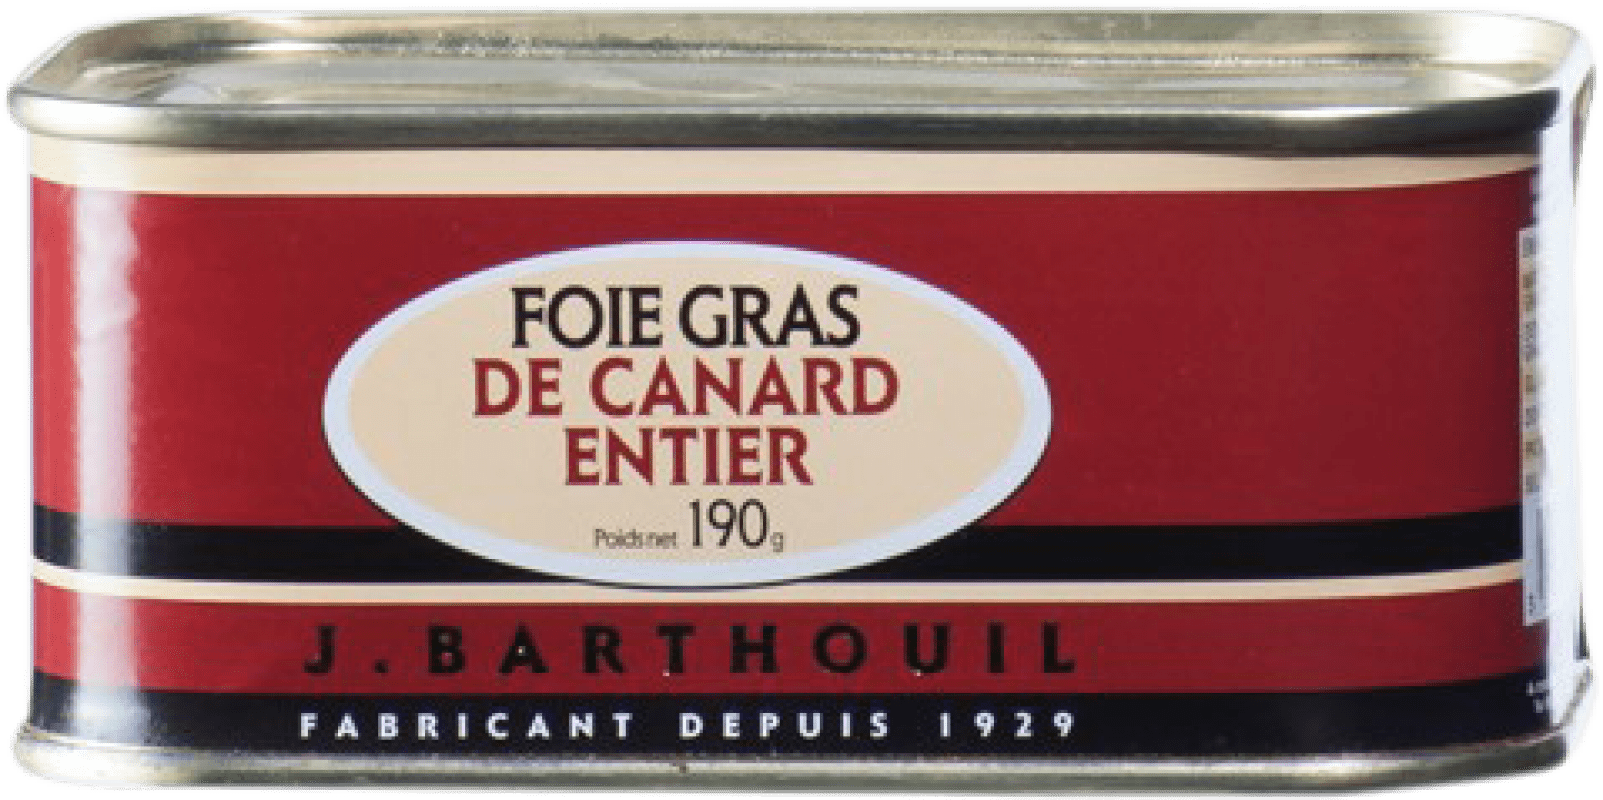 32,95 € Spedizione Gratuita | Foie y Patés J. Barthouil Foie Grass de Canard Entier Francia